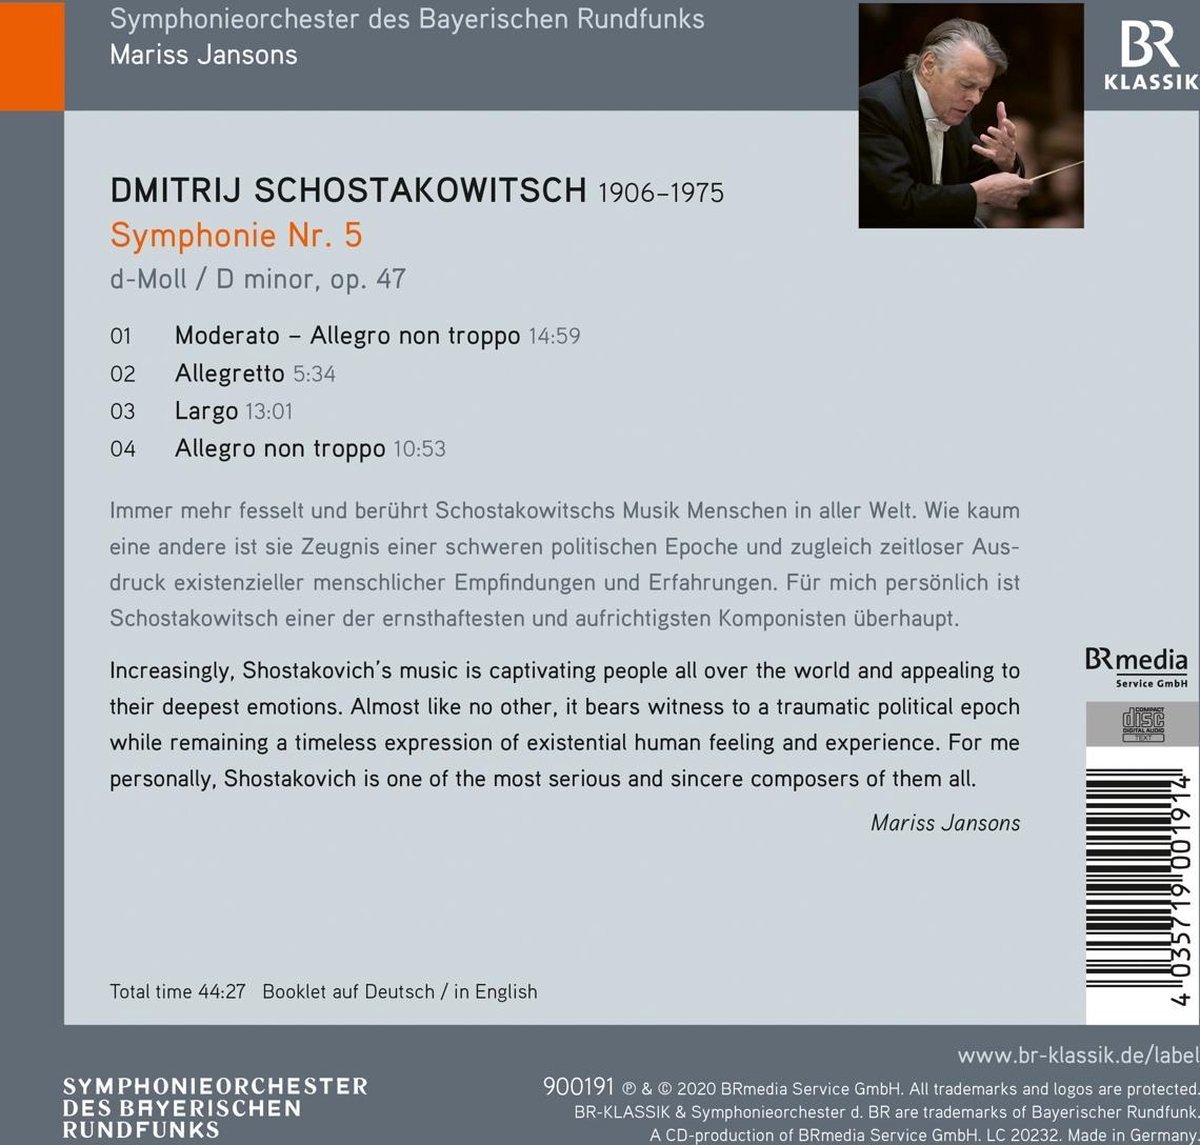 Shostakovich: Symphony No. 5 | Dmitri Shostakovich, Mariss Jansons, Symphonieorchester des Bayerischen Rundfunks